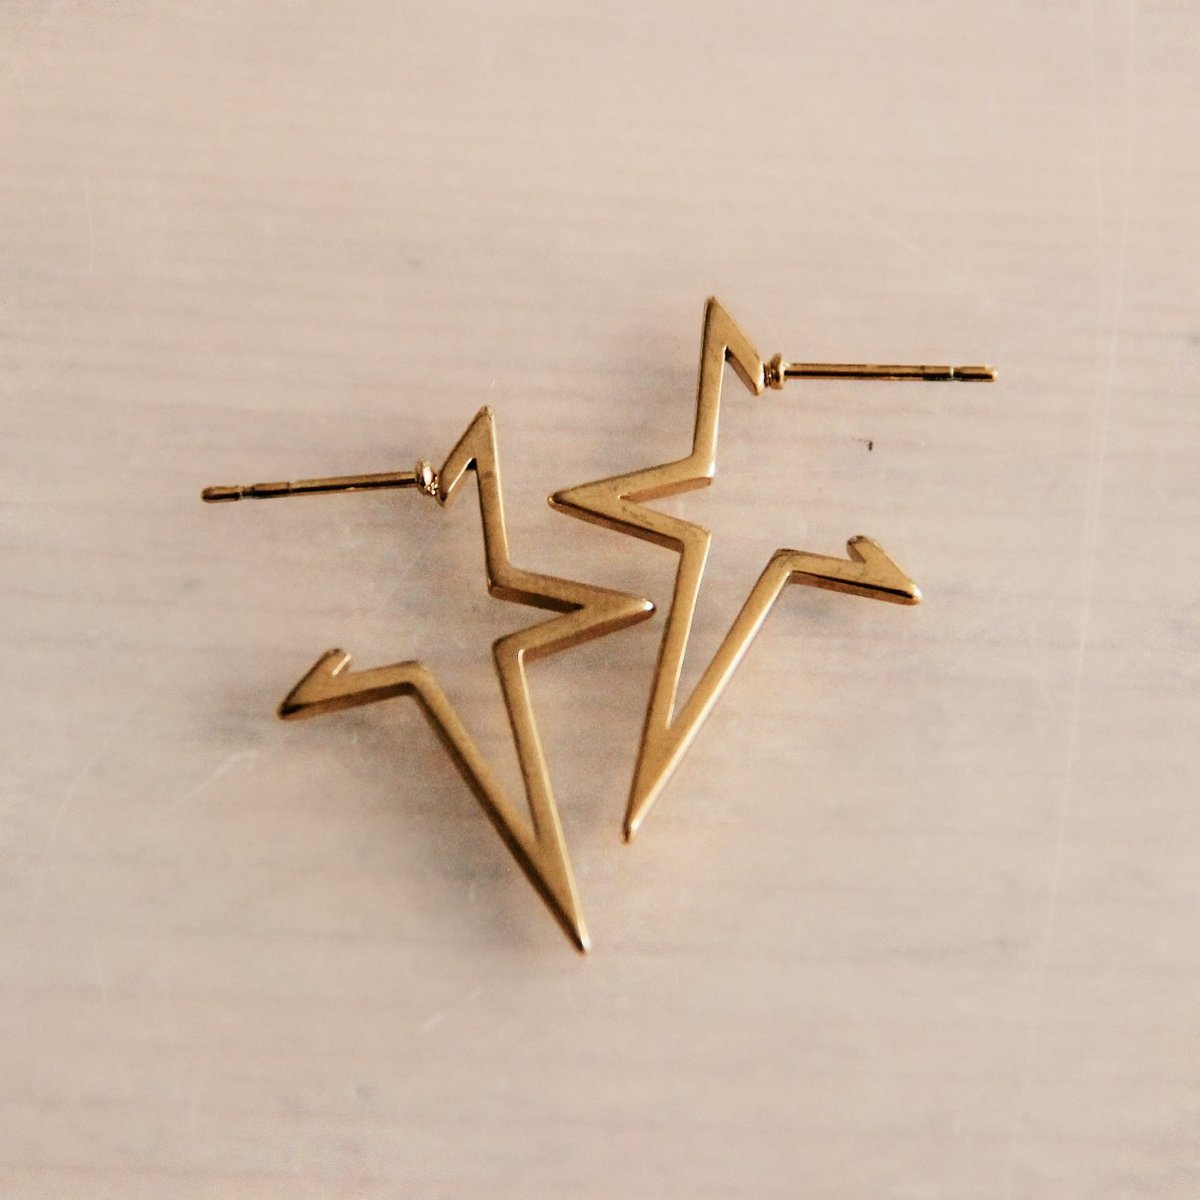 Stainless steel rockstar stud earrings - gold